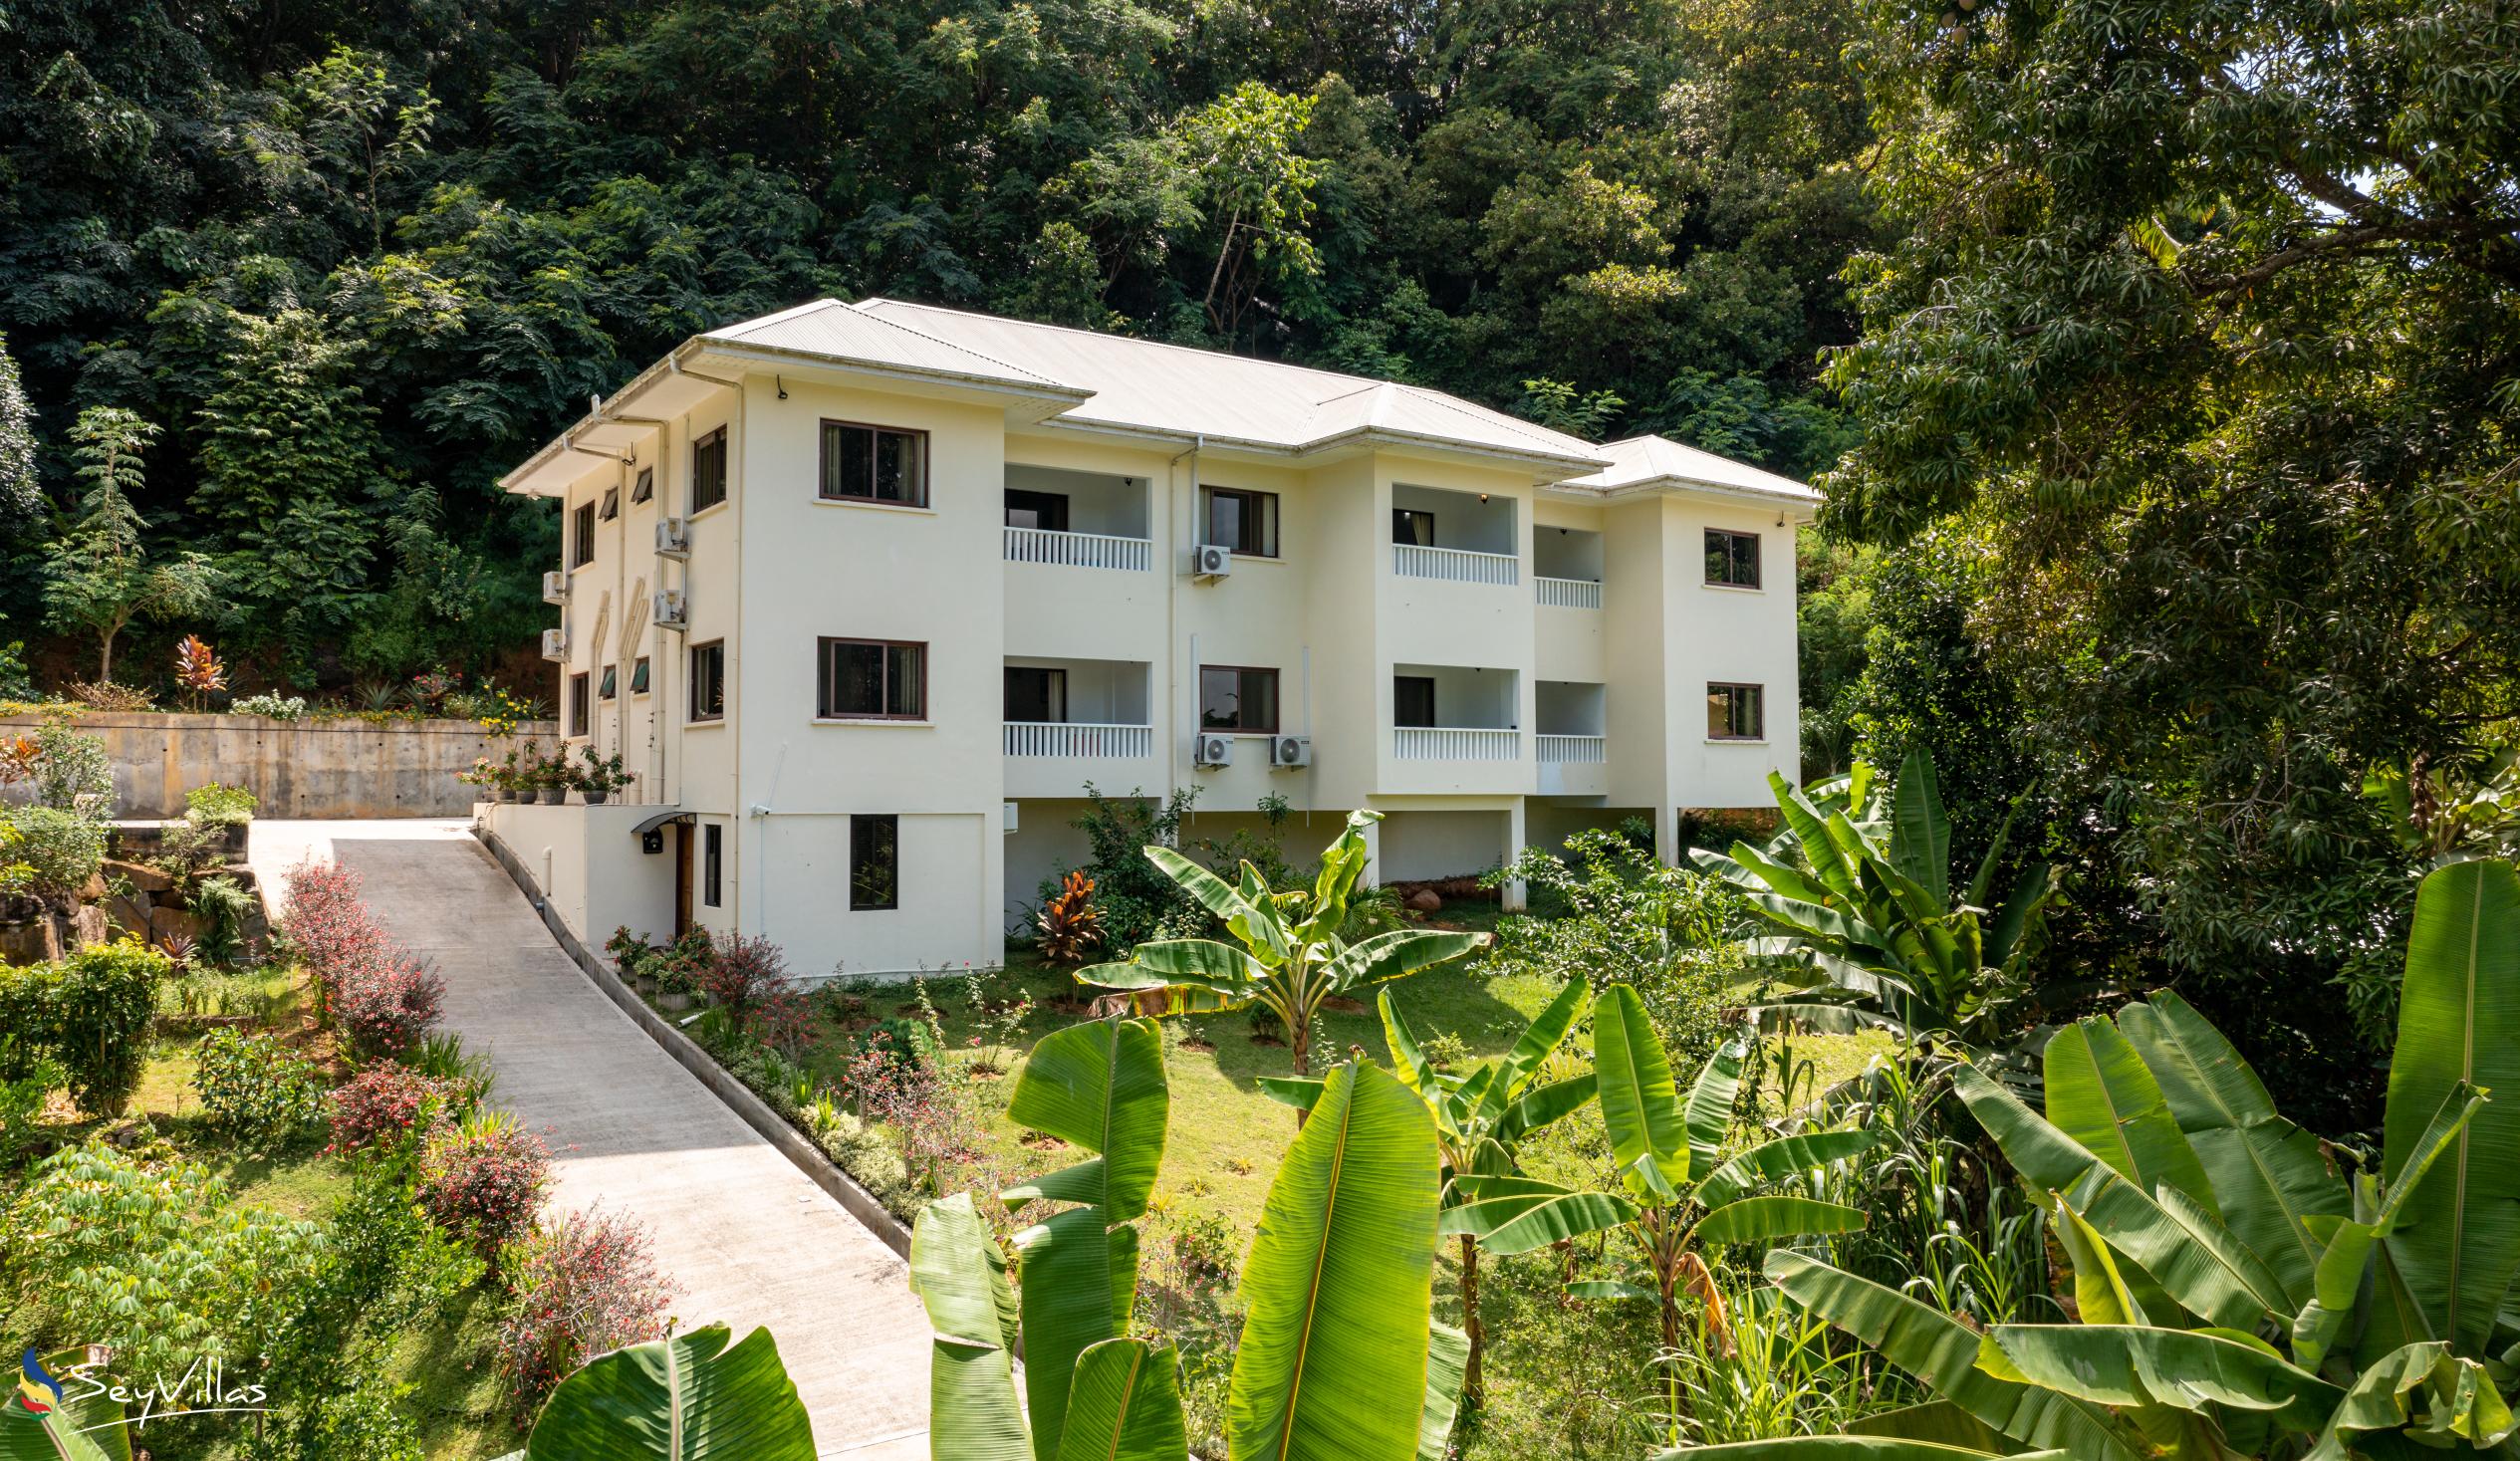 Photo 49: Kanasuk Self Catering Apartments - Outdoor area - Mahé (Seychelles)